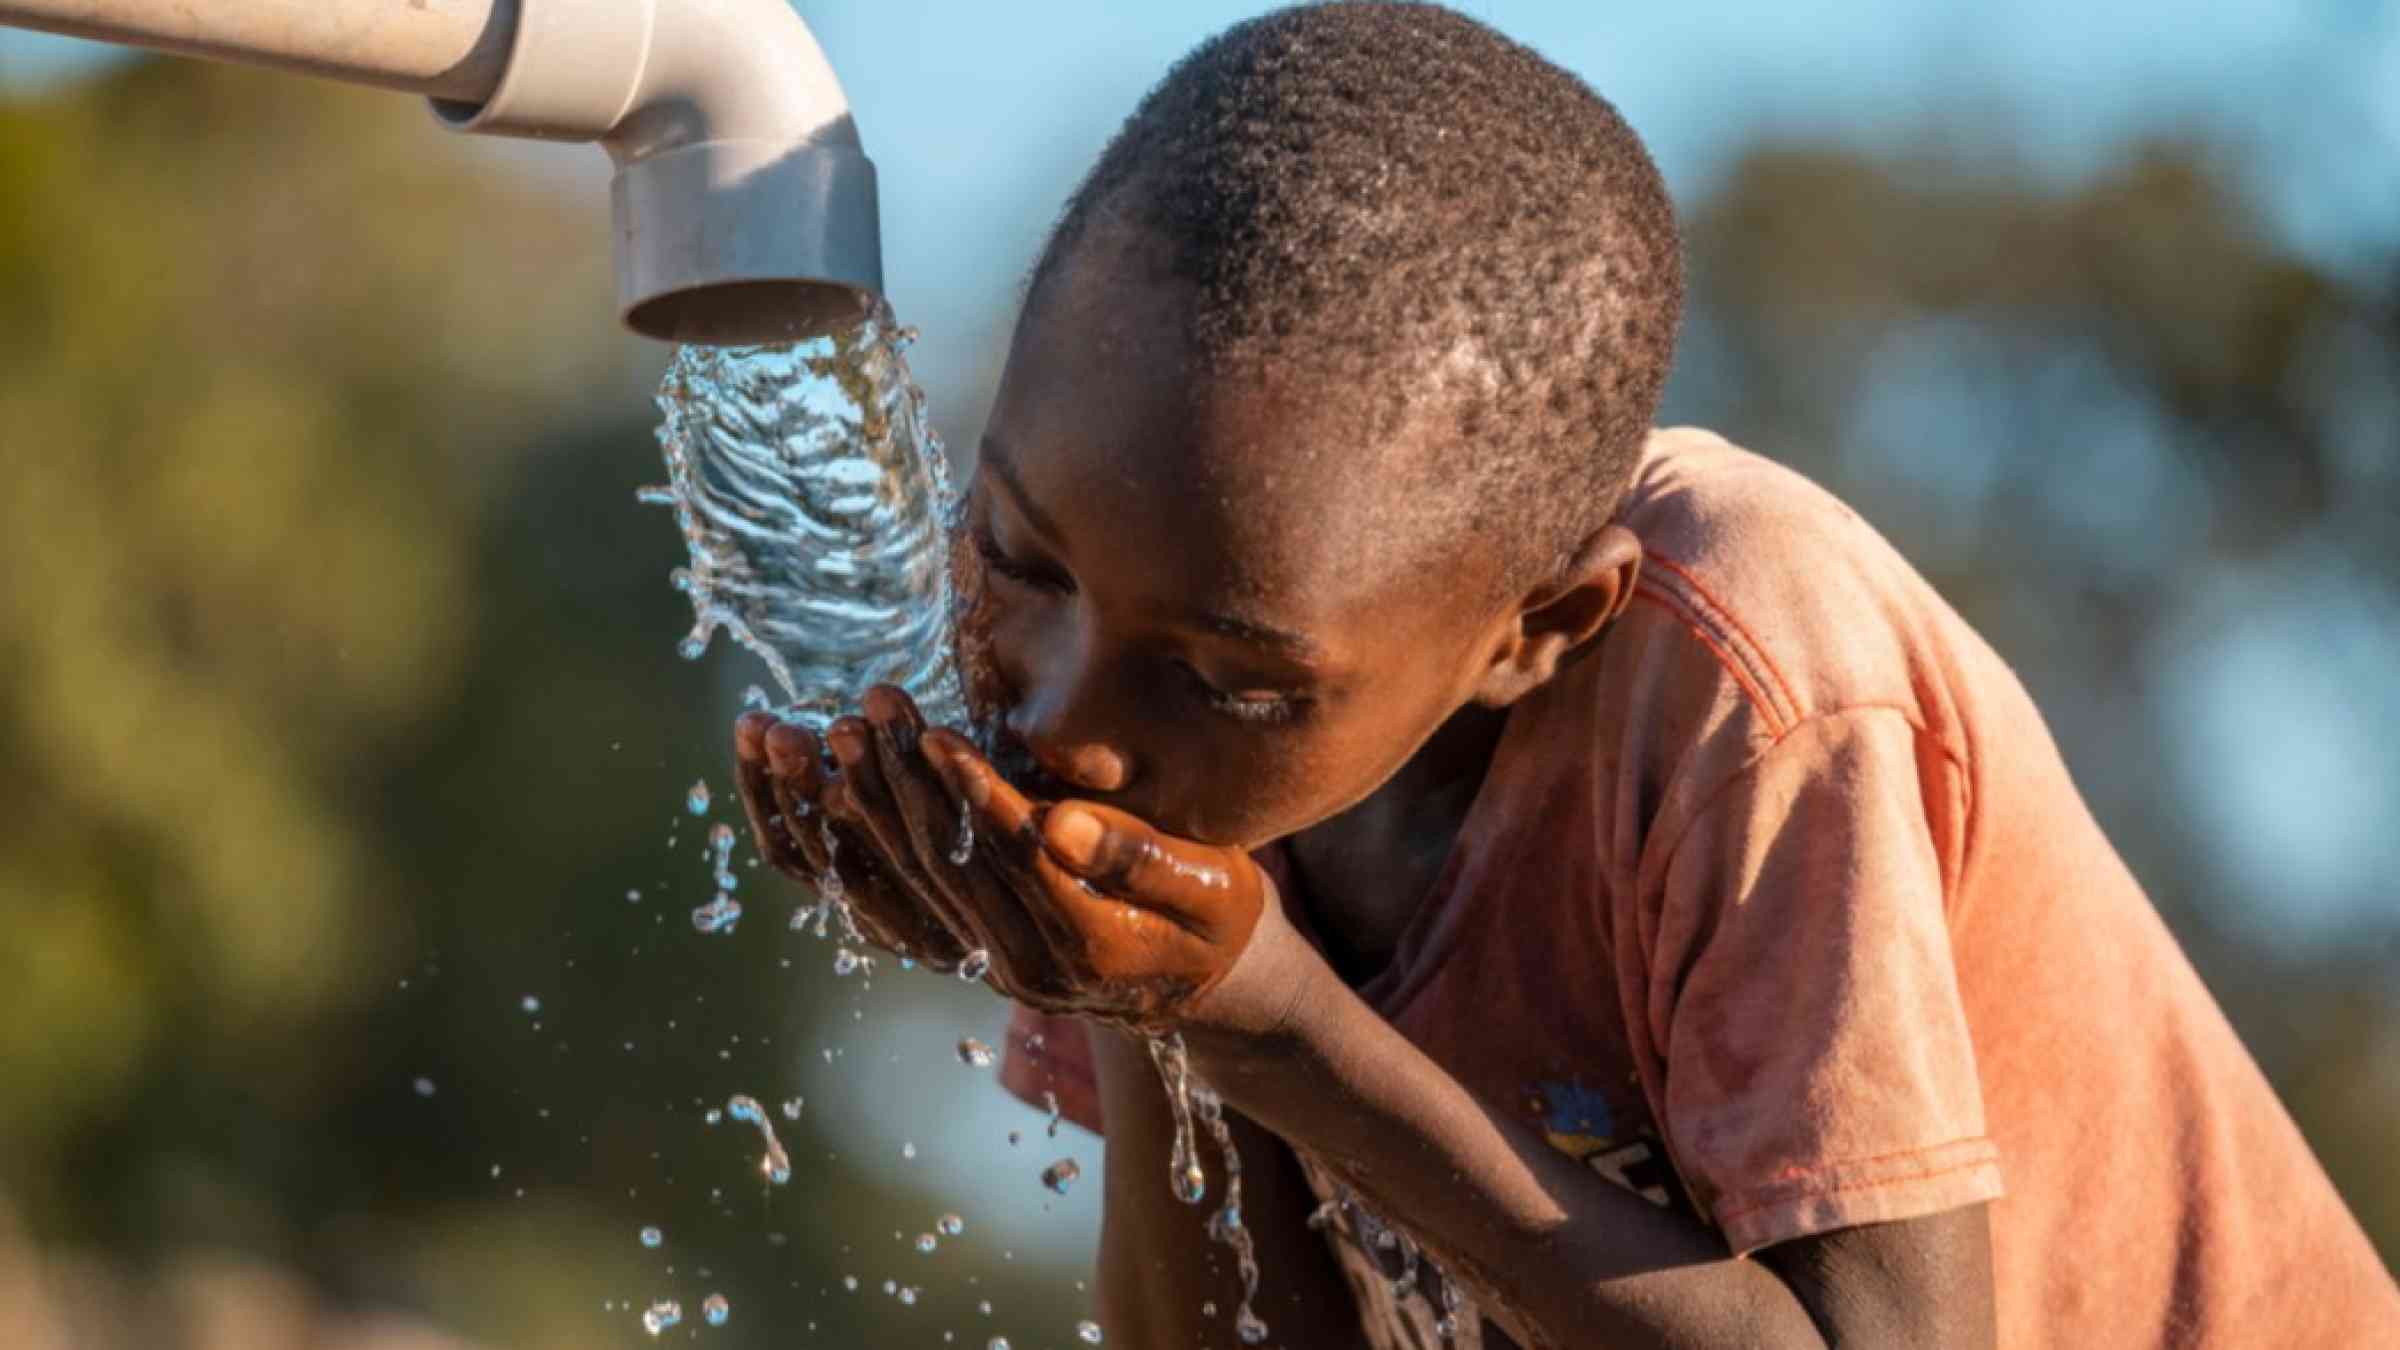 A child drinks water in Mali, Kenya